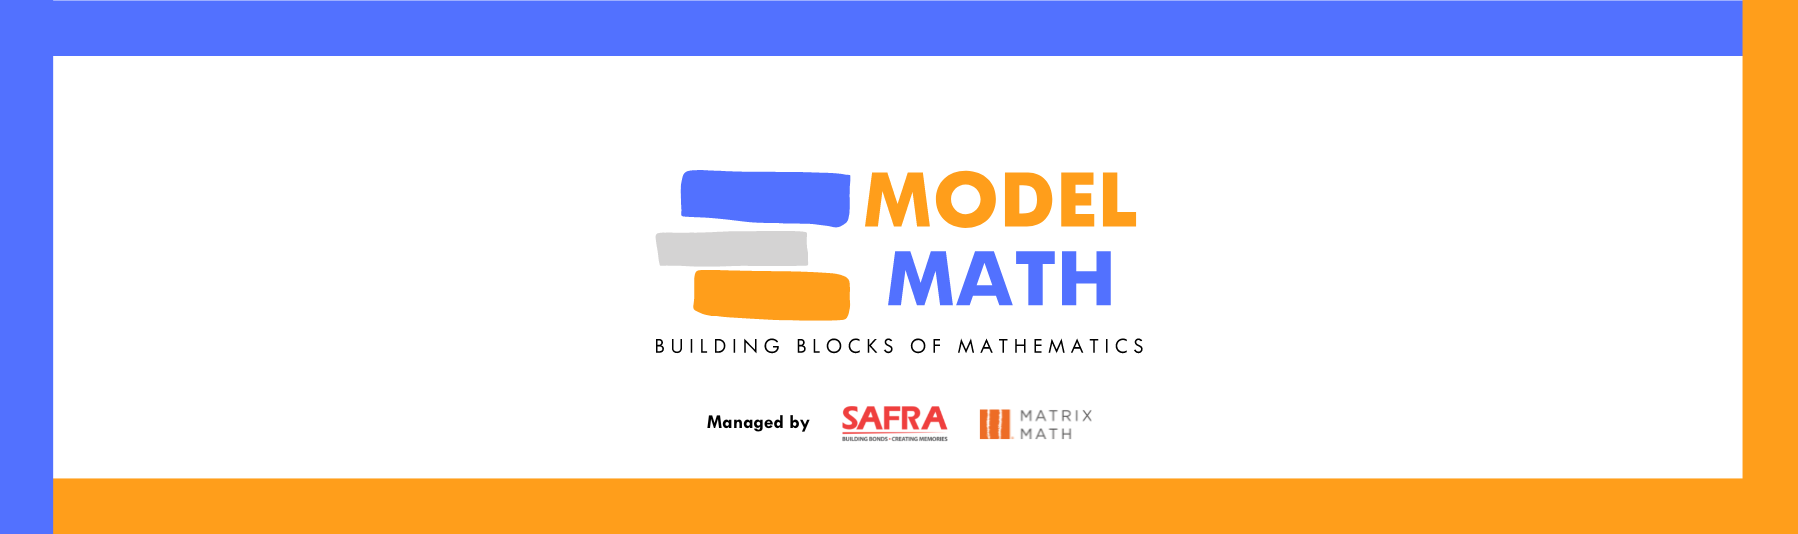 model-math-website-header